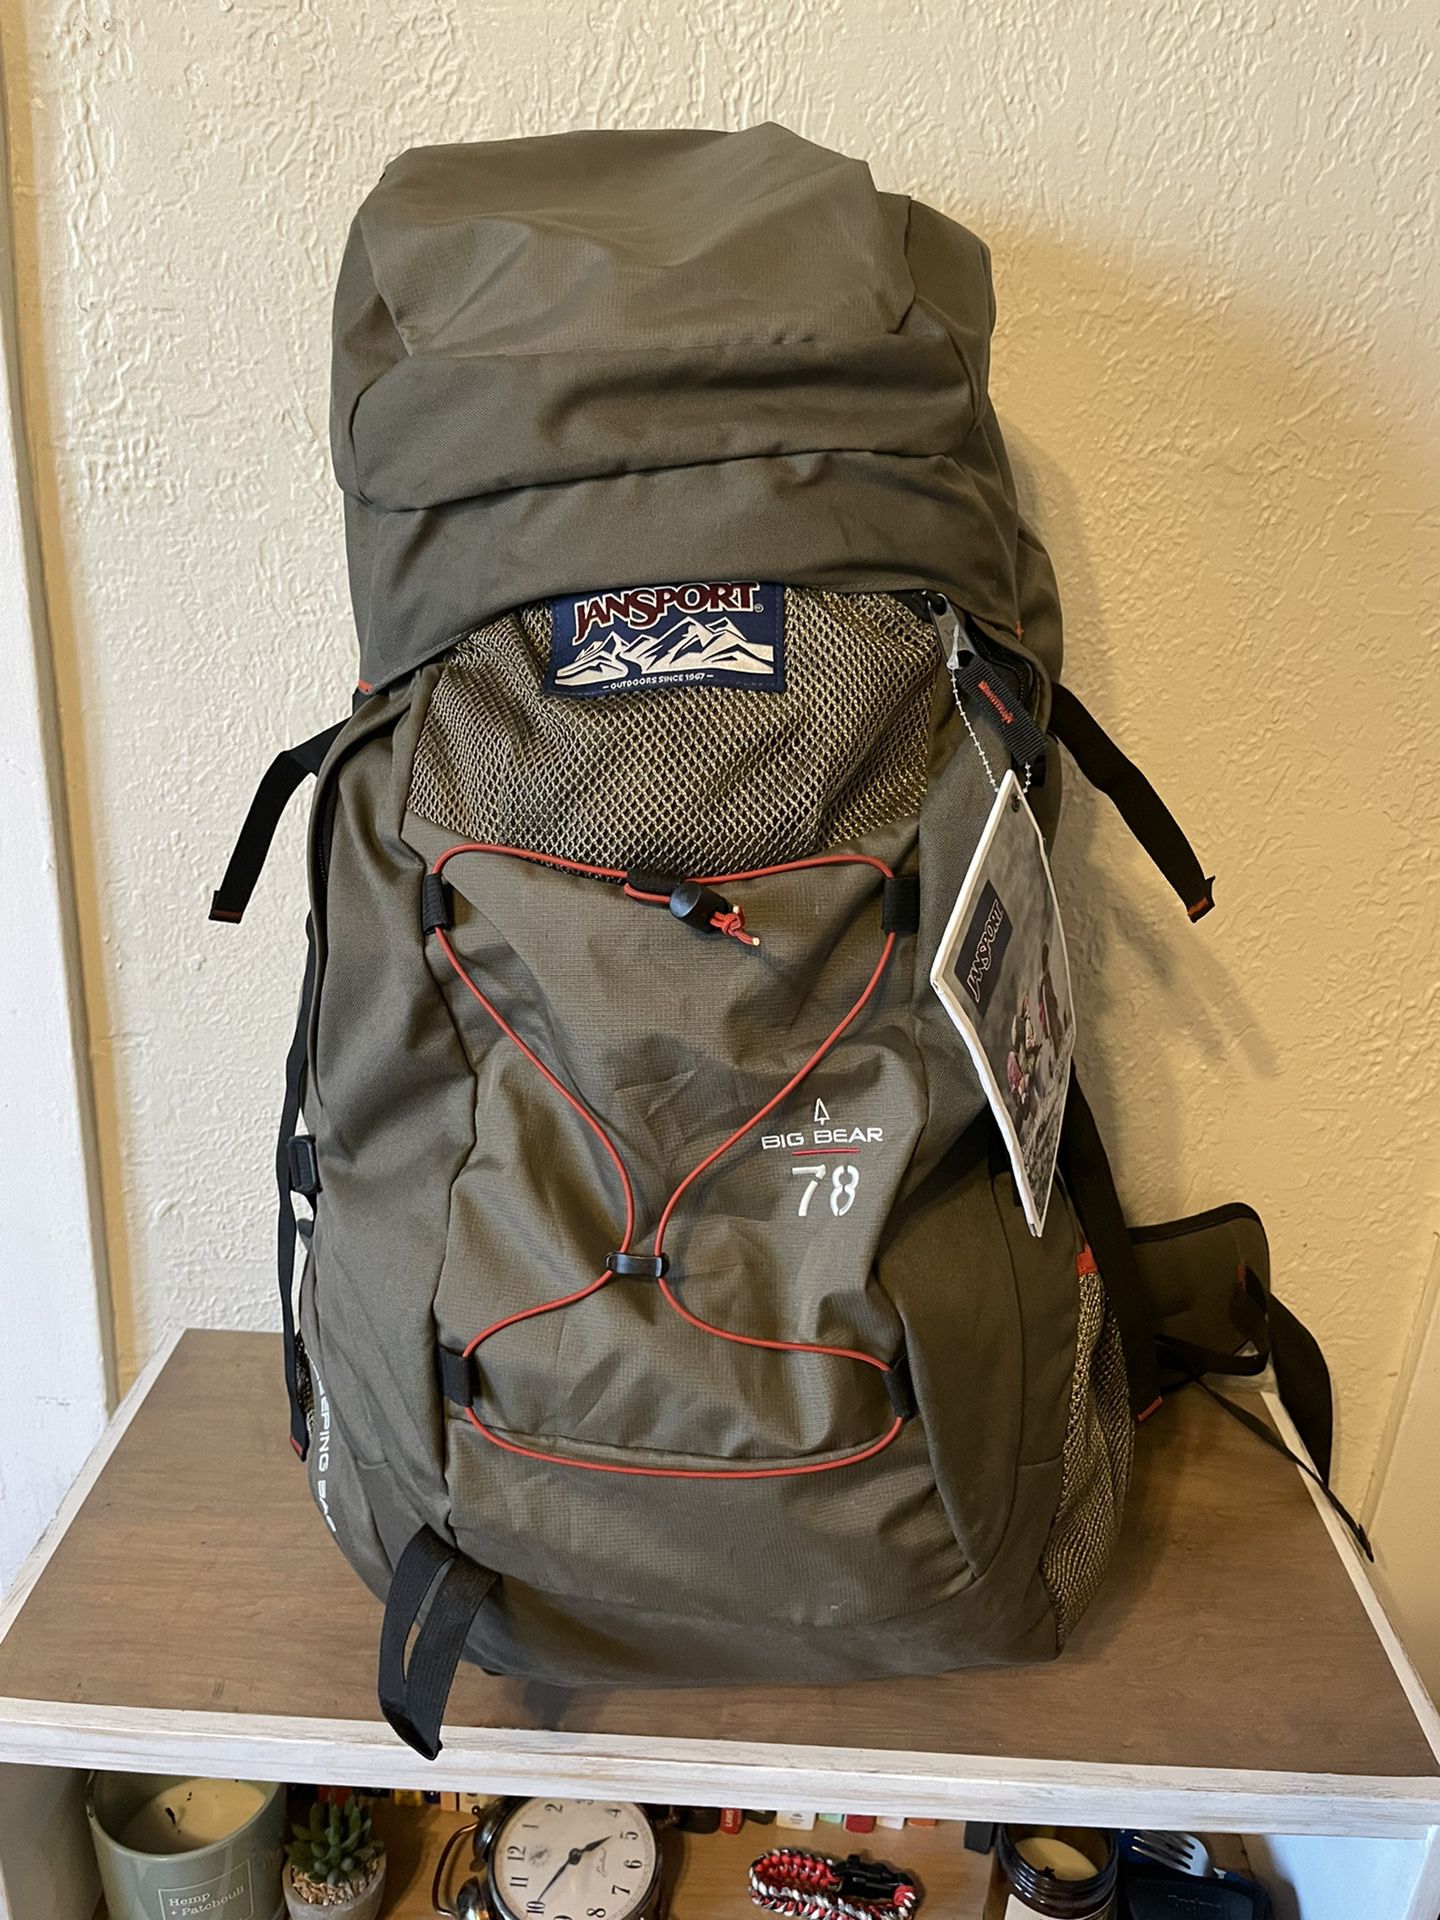 New Men’s Jansport Big Bear 78 Hiking/camping Backpack 